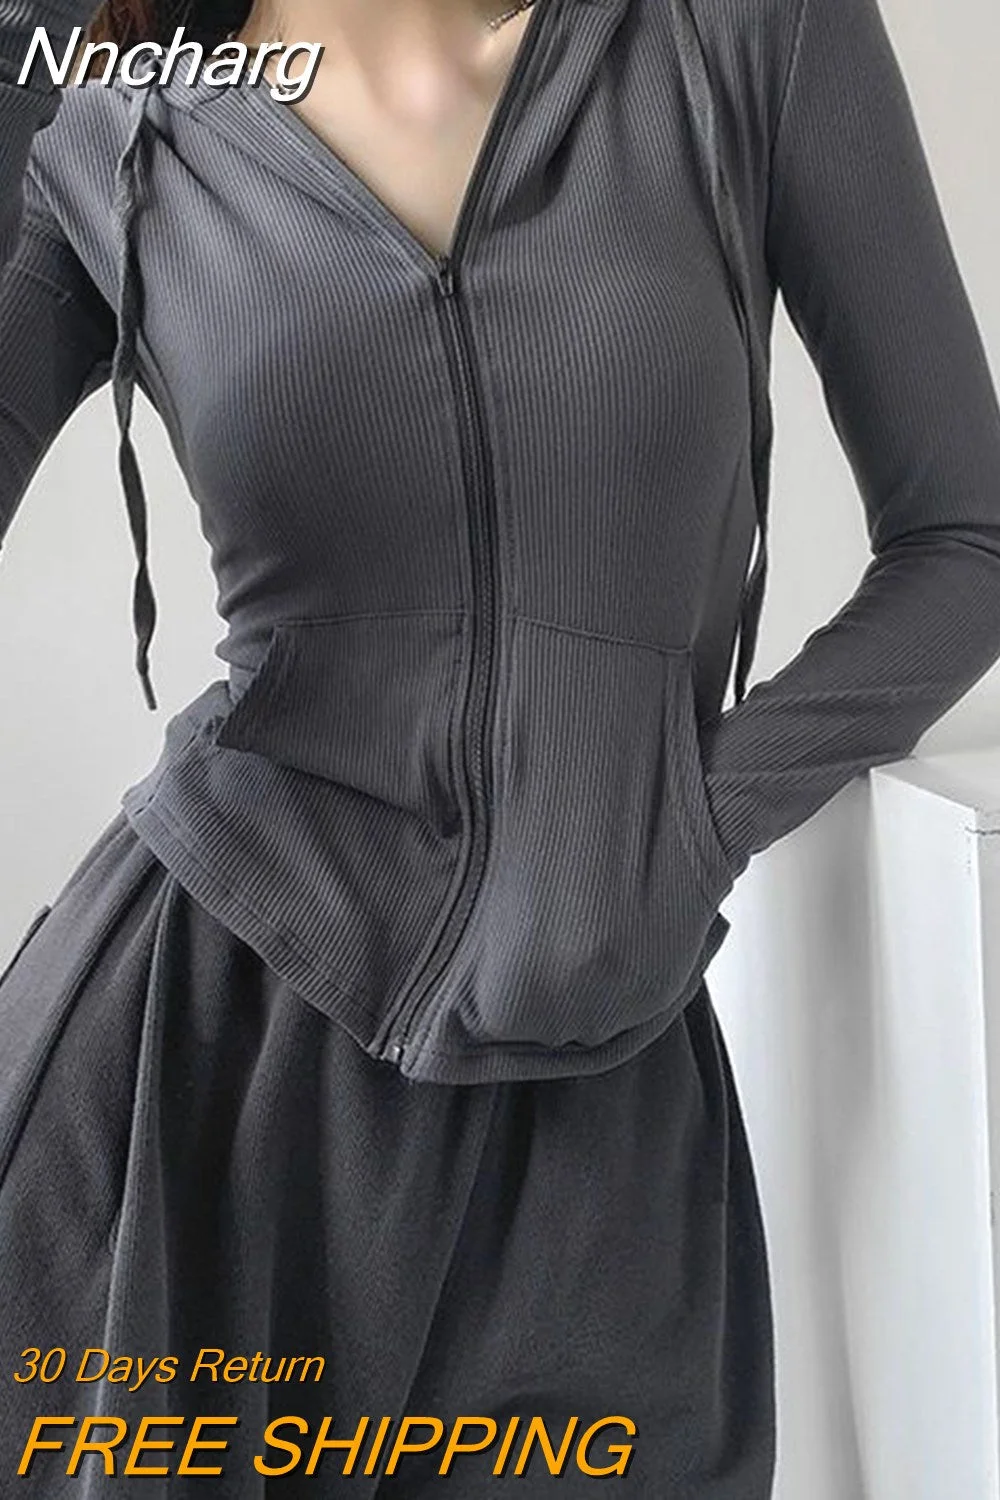 Nncharge Hooded Women Solid Gray Long Sleeve Slim Fit Sudaderas Para Mujer Short Zip Up Sweatshirt American Vintage Coats Spring